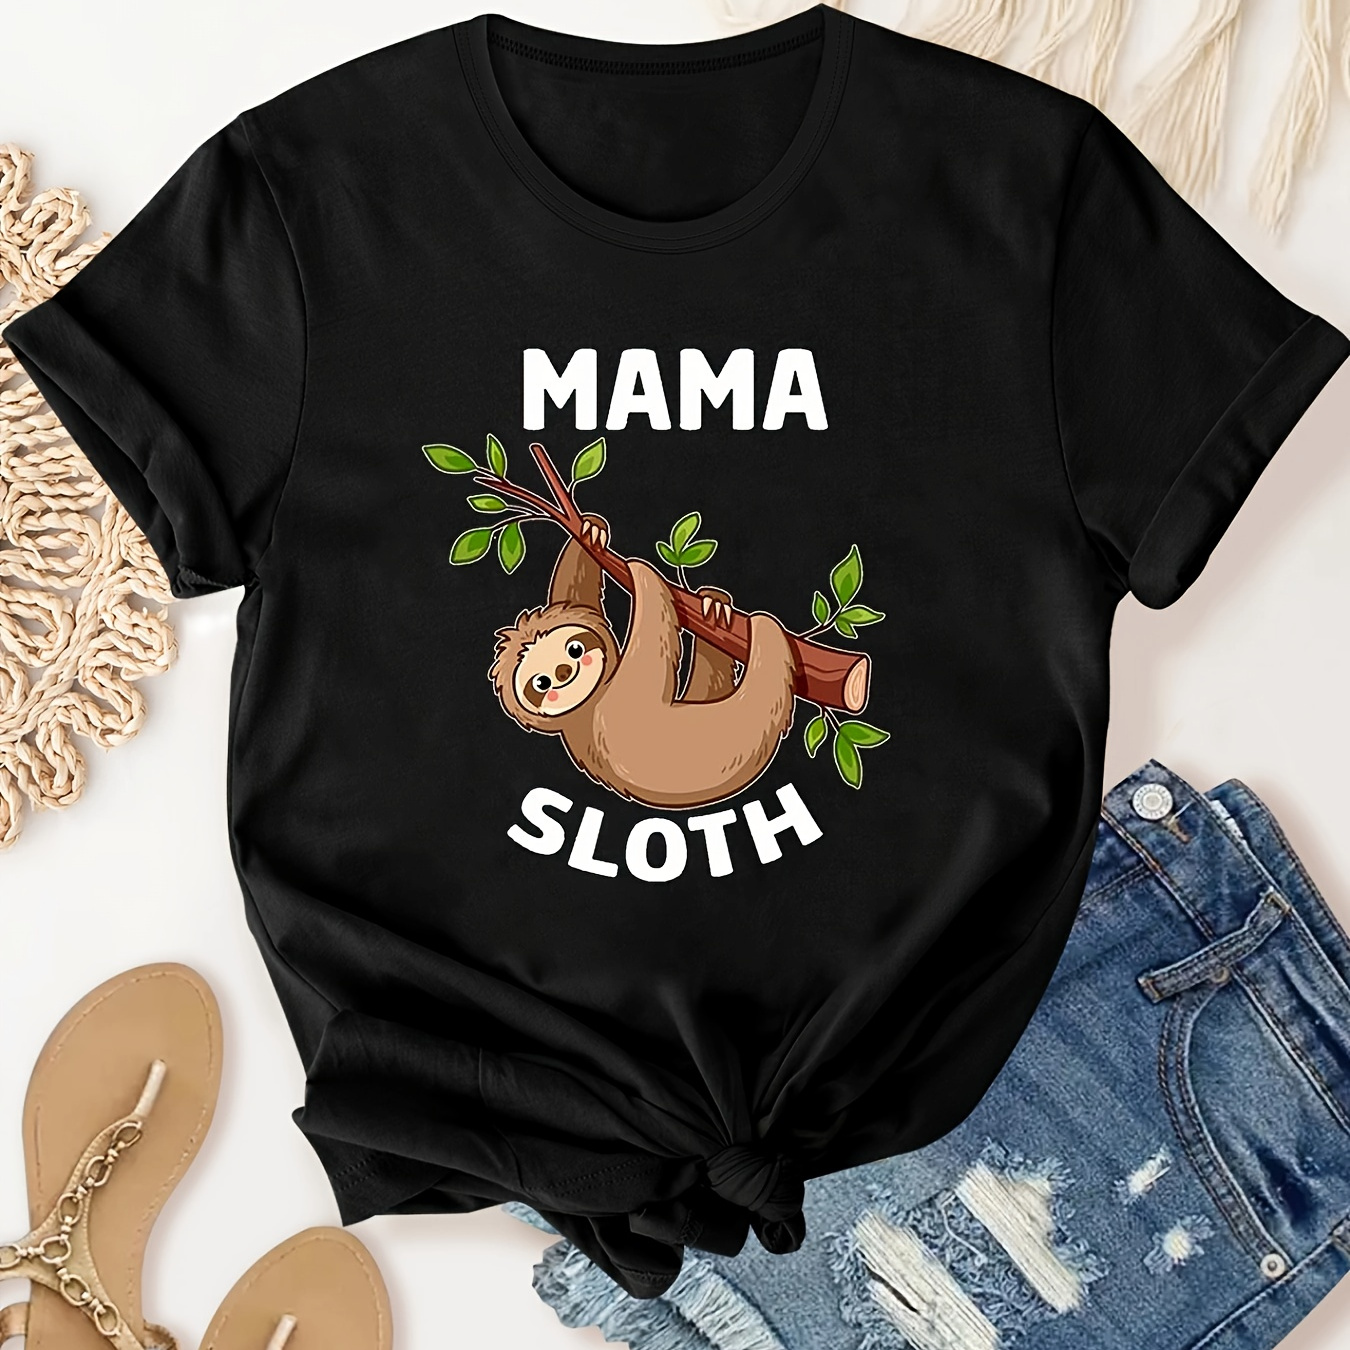 

Mama Sloth Print T-shirt, Crew Neck Short Sleeve T-shirt, Casual Sport Tops, Women's Clothing